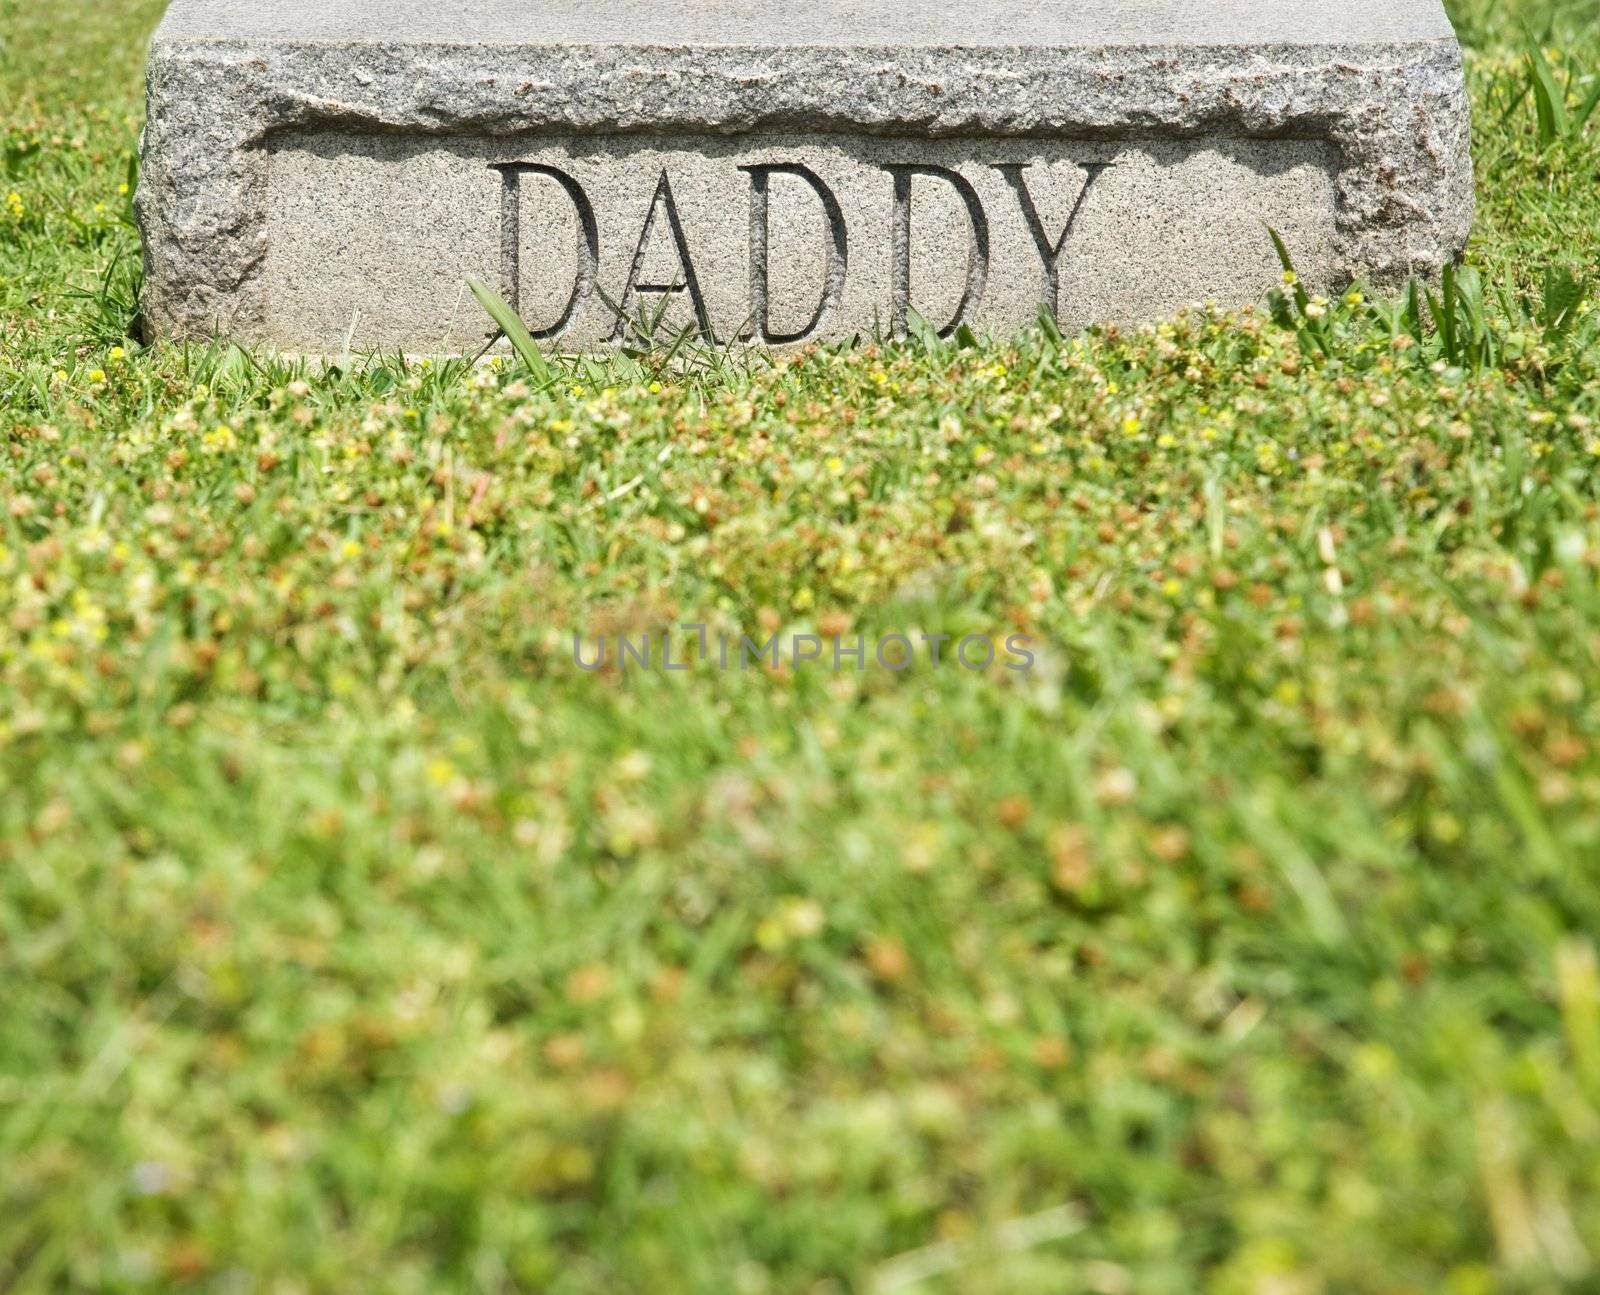 Gravestone with "Daddy" by iofoto